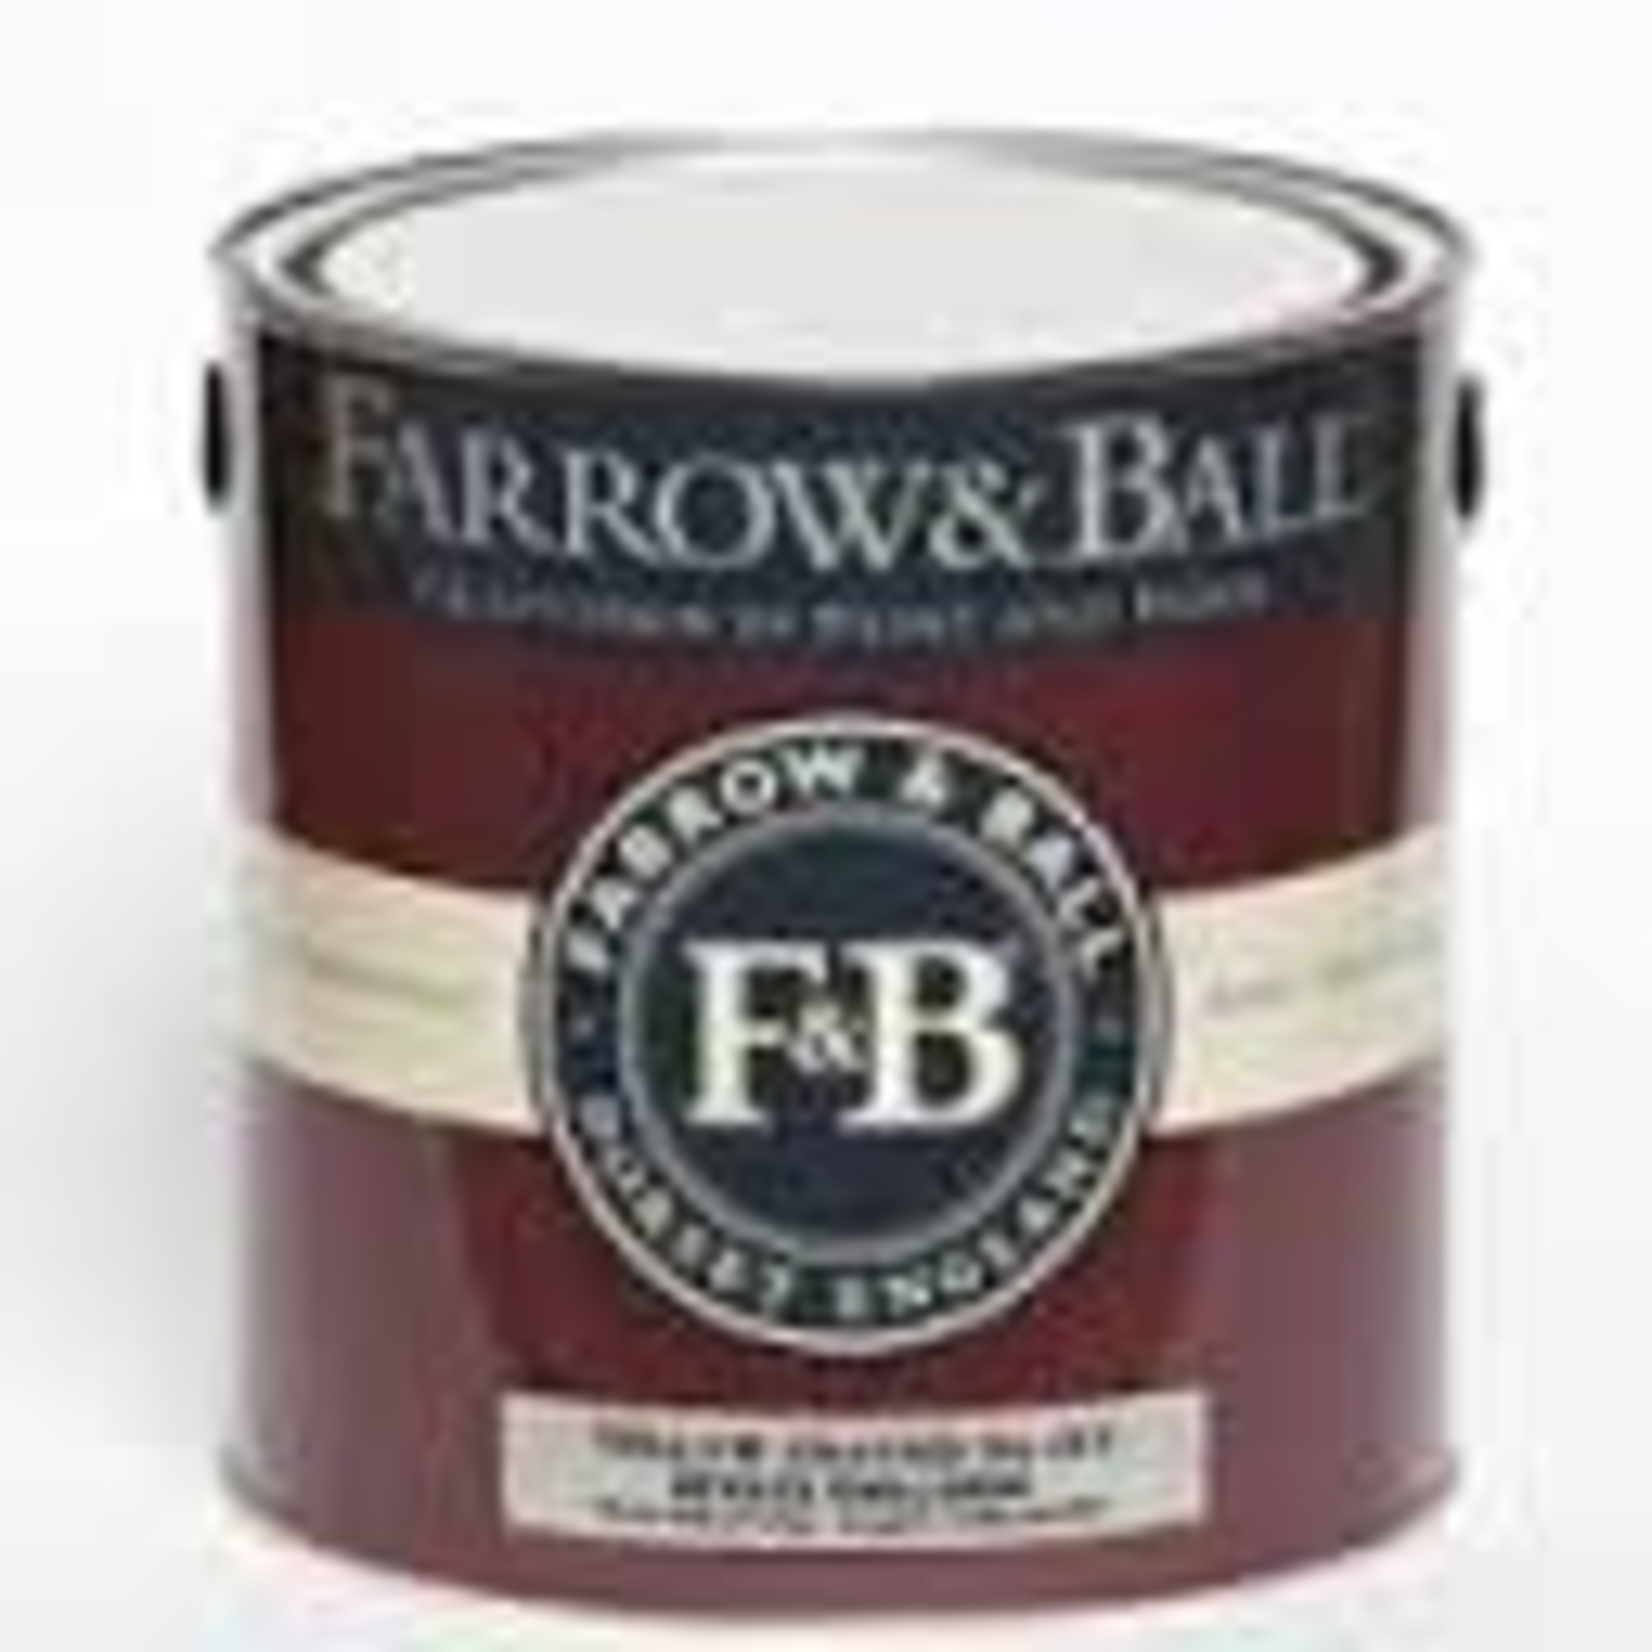 Farrow and Ball Gallon Modern Emulsion Light Stone No. 9